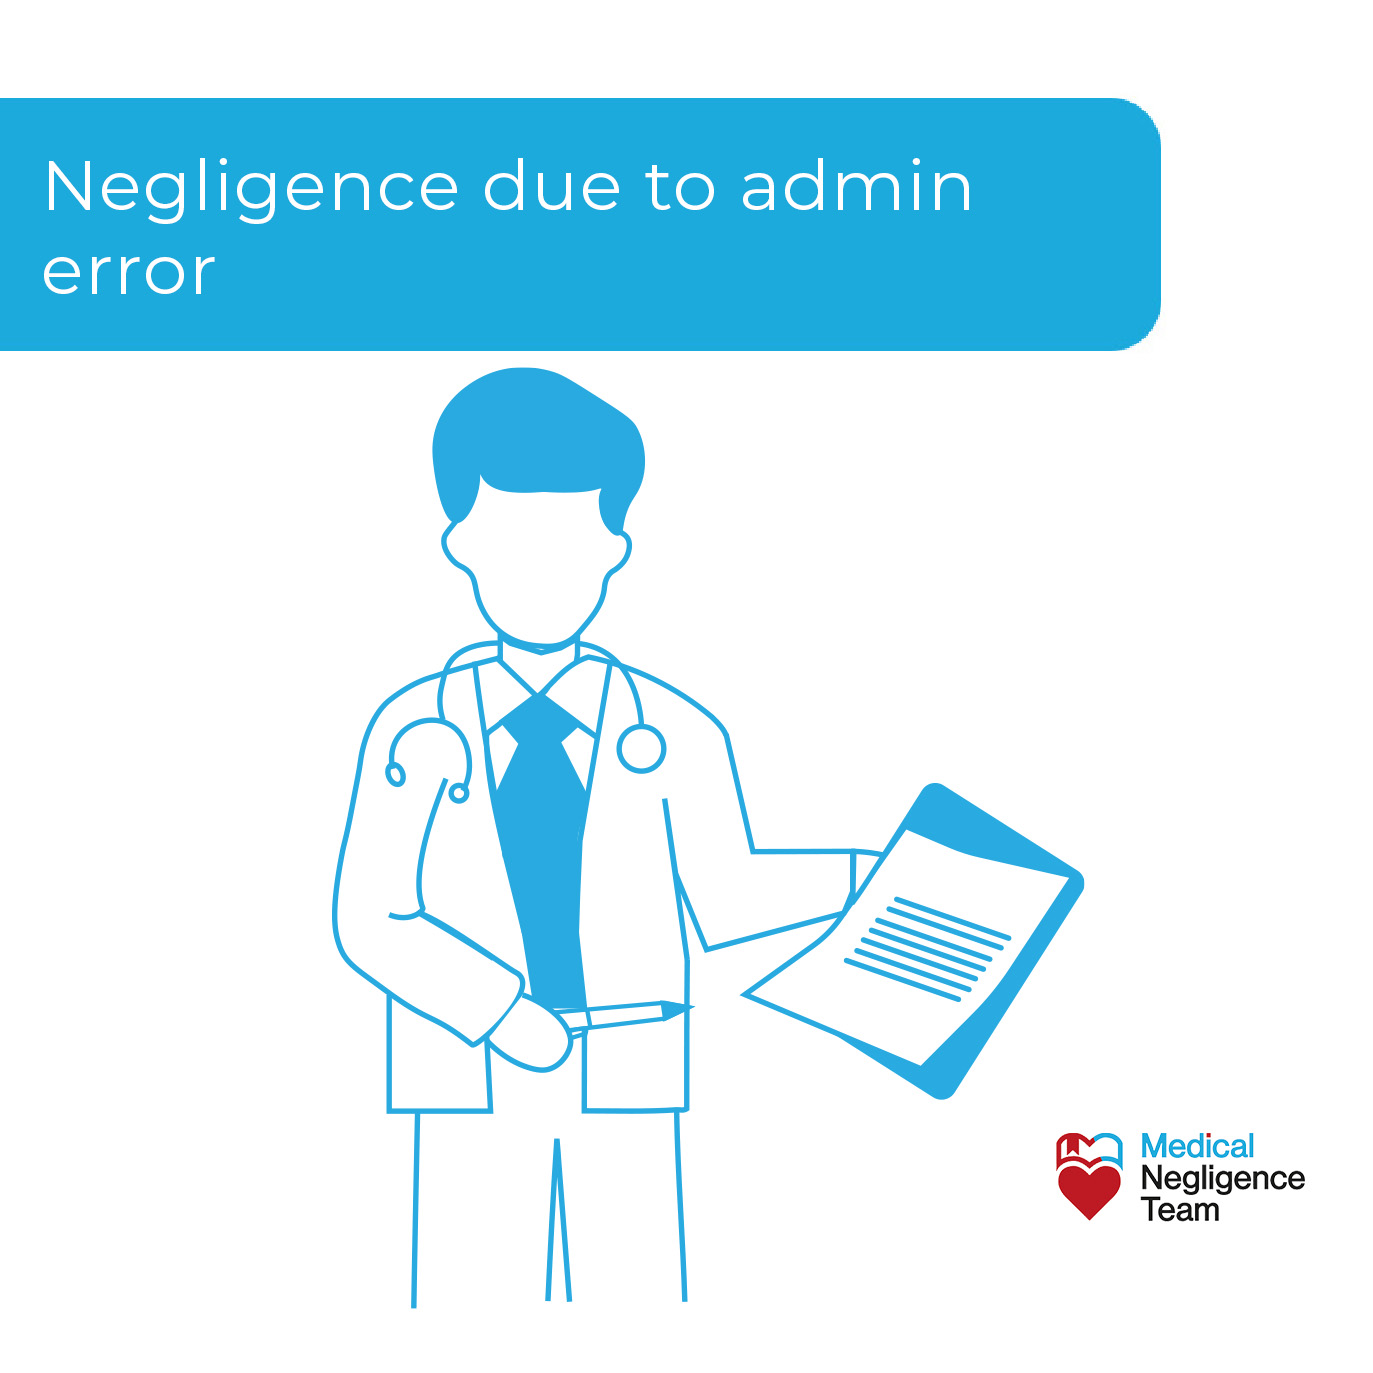 Admin error leading to medical negligence